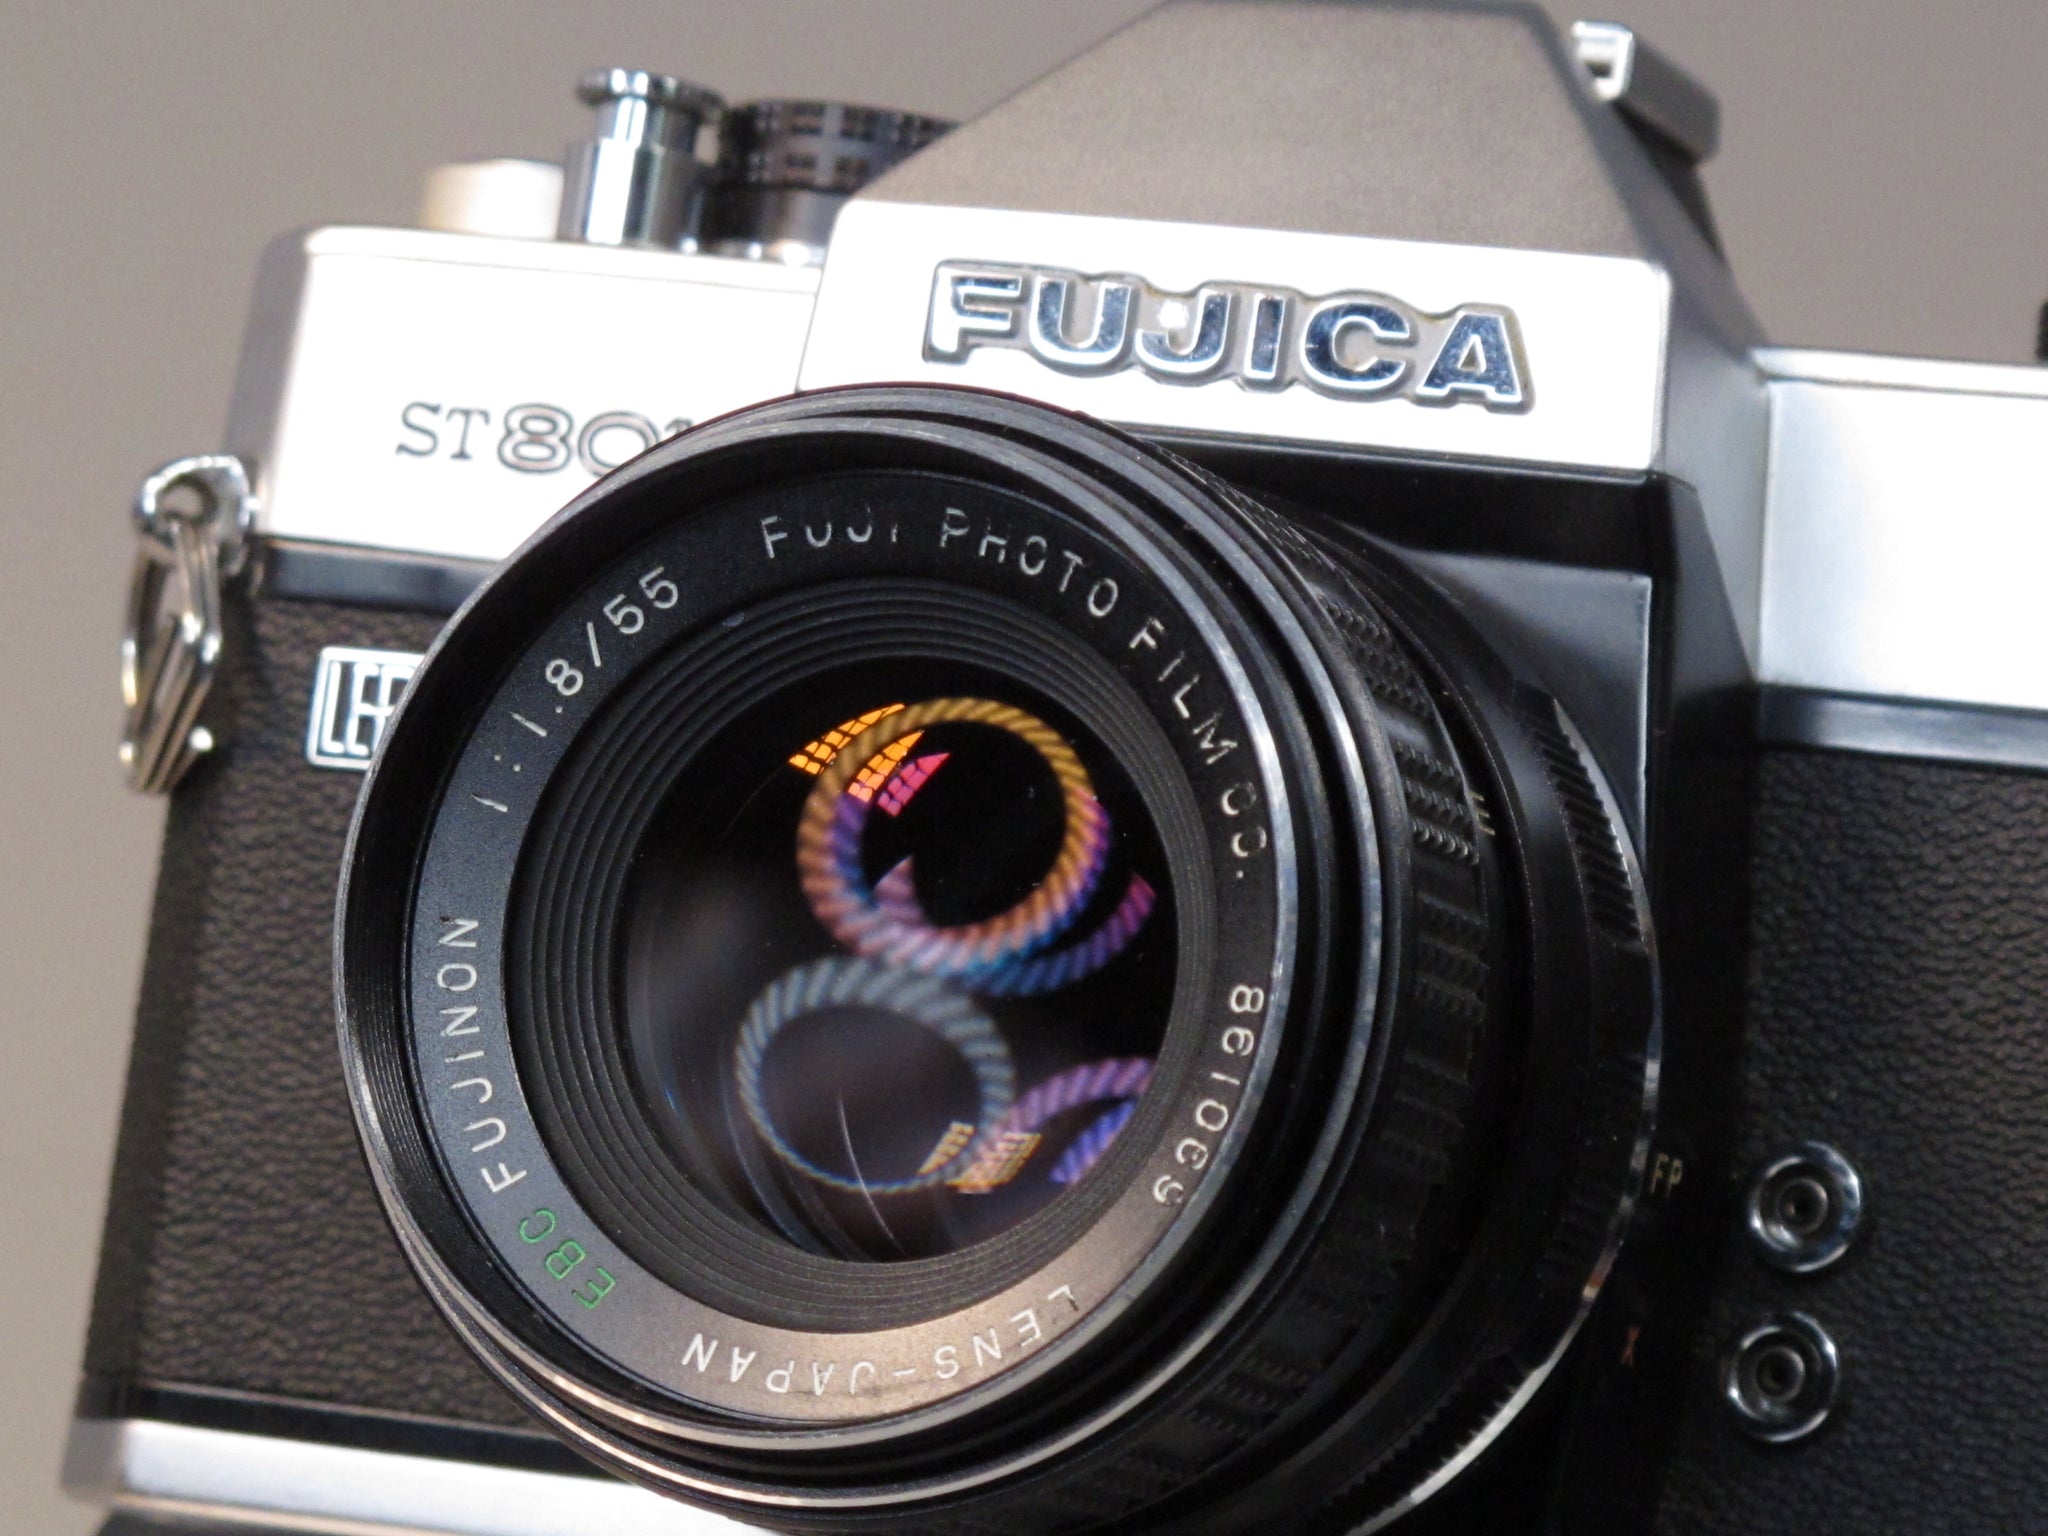 FUJICA ST801 35mm SLR camera with 55mm and 135mm lenses – Phototek